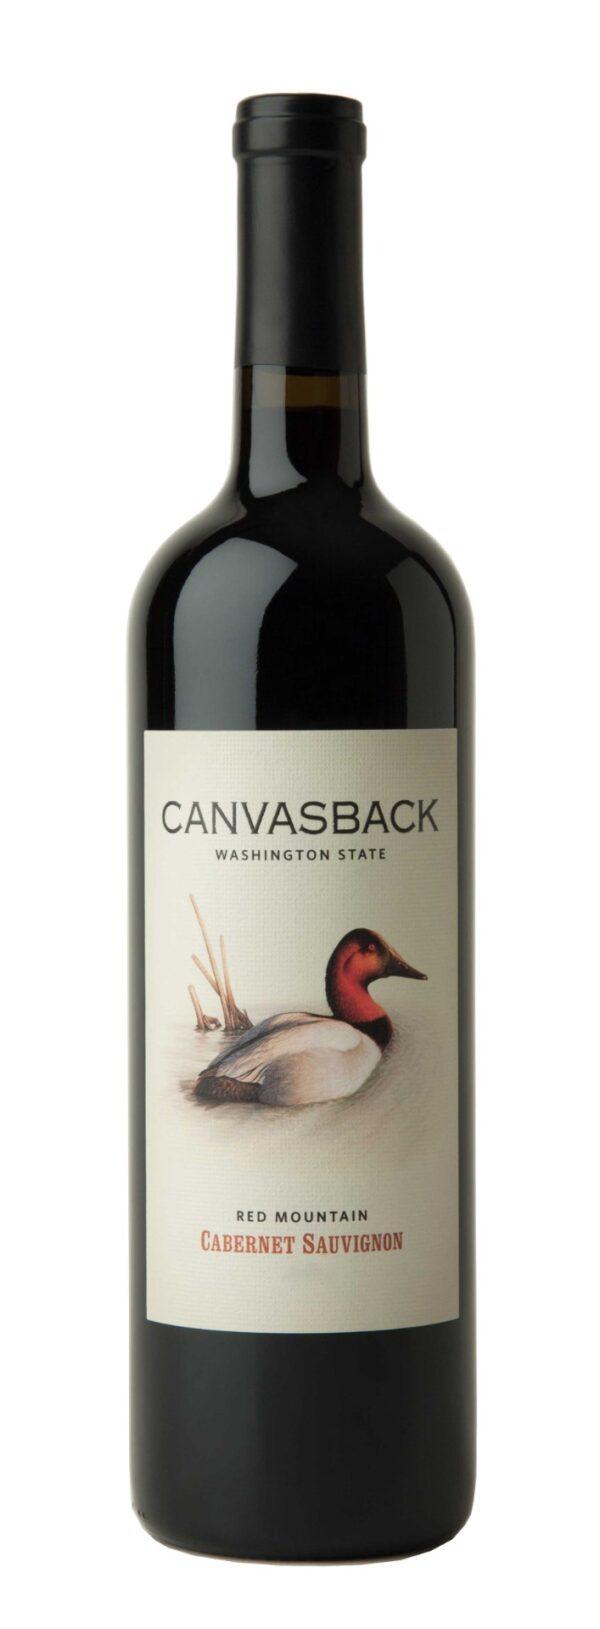 Canvasback 2017 Cabernet Sauvignon, Red Mountain. (Courtesy of Duckhorn Wine Company)